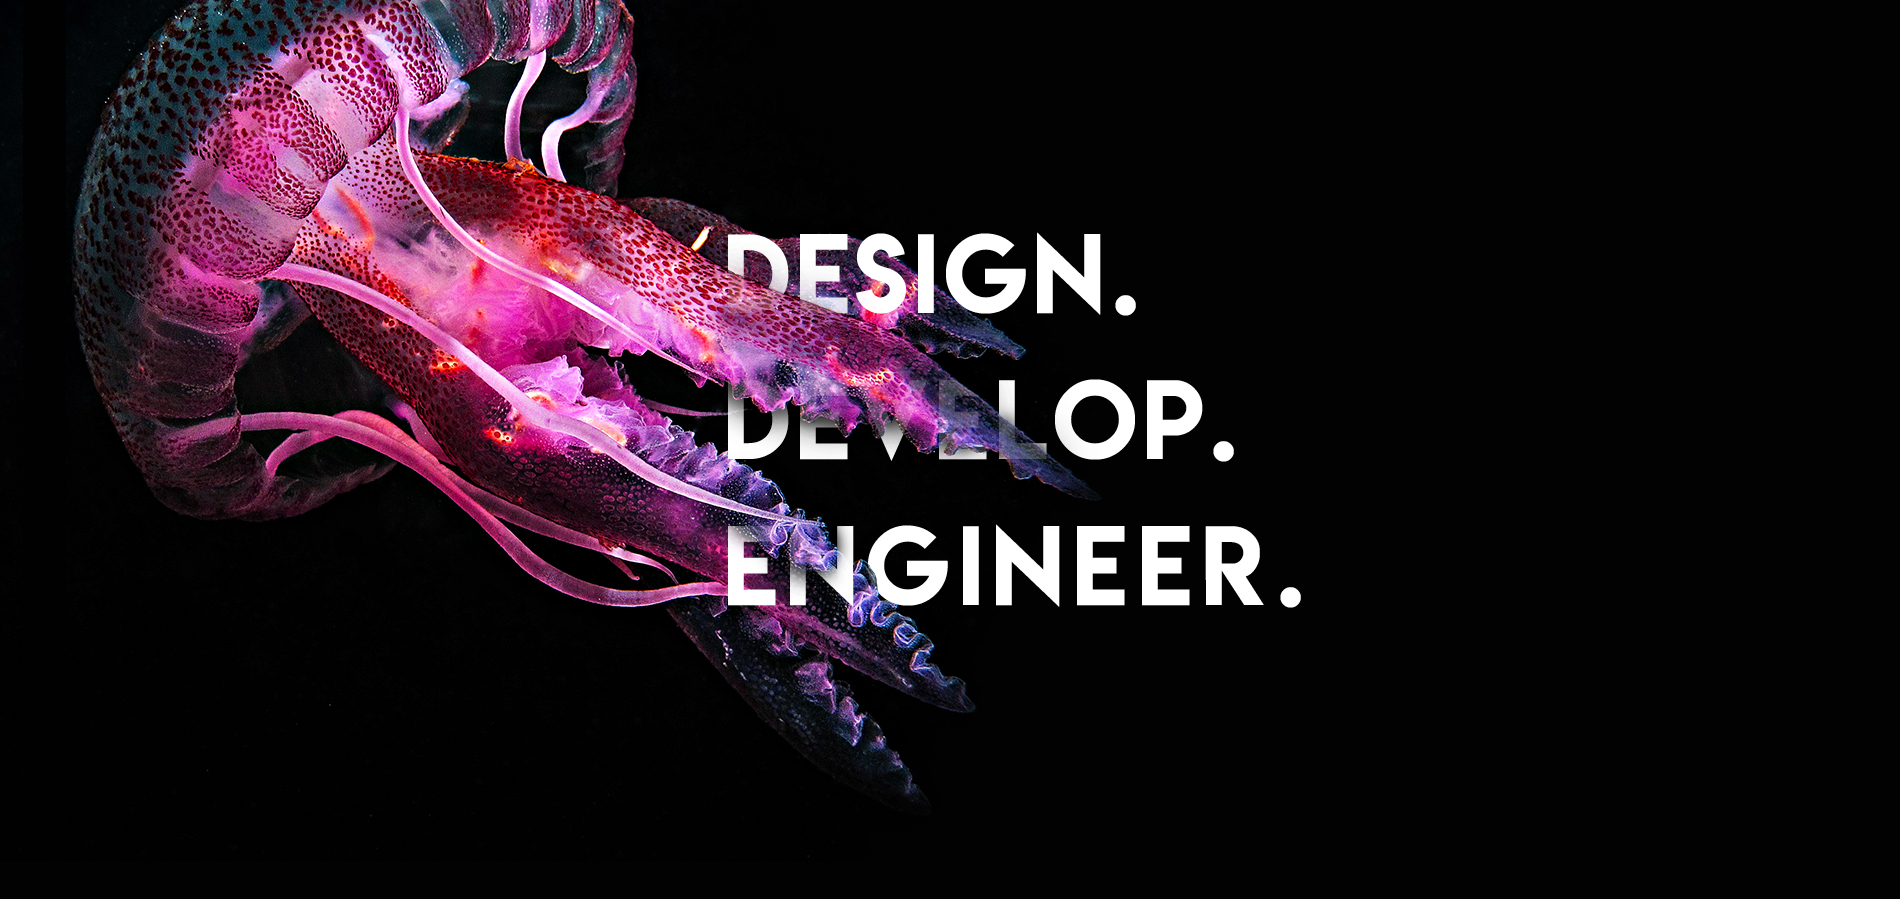 Jellyfish Image with slogan: Design, Develop, Engineer.